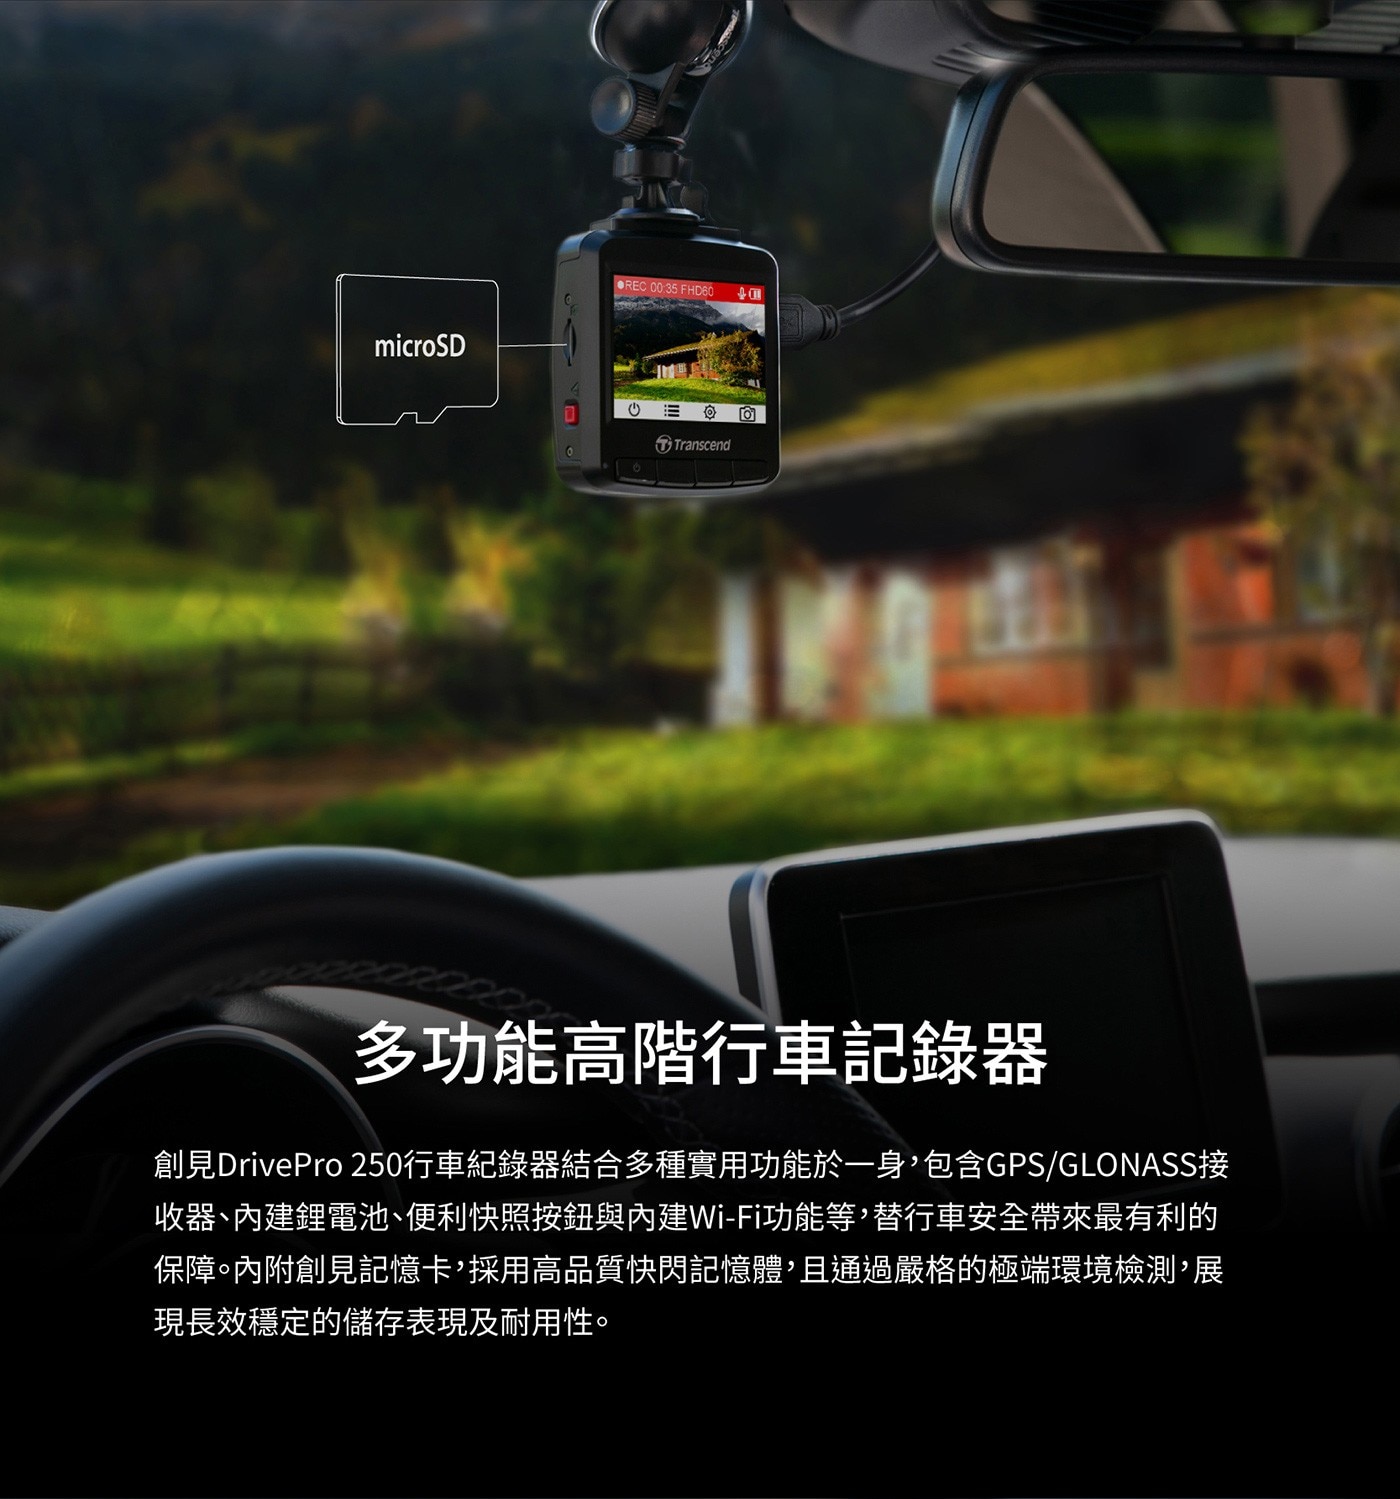 Transcend 創見 DrivePro™ 250 行車記錄器，內建 Wi-Fi GPS 功能，附 64G 記憶卡，清晰畫面全都錄，體現安全美學，高感光元件，夜間拍攝也清晰。